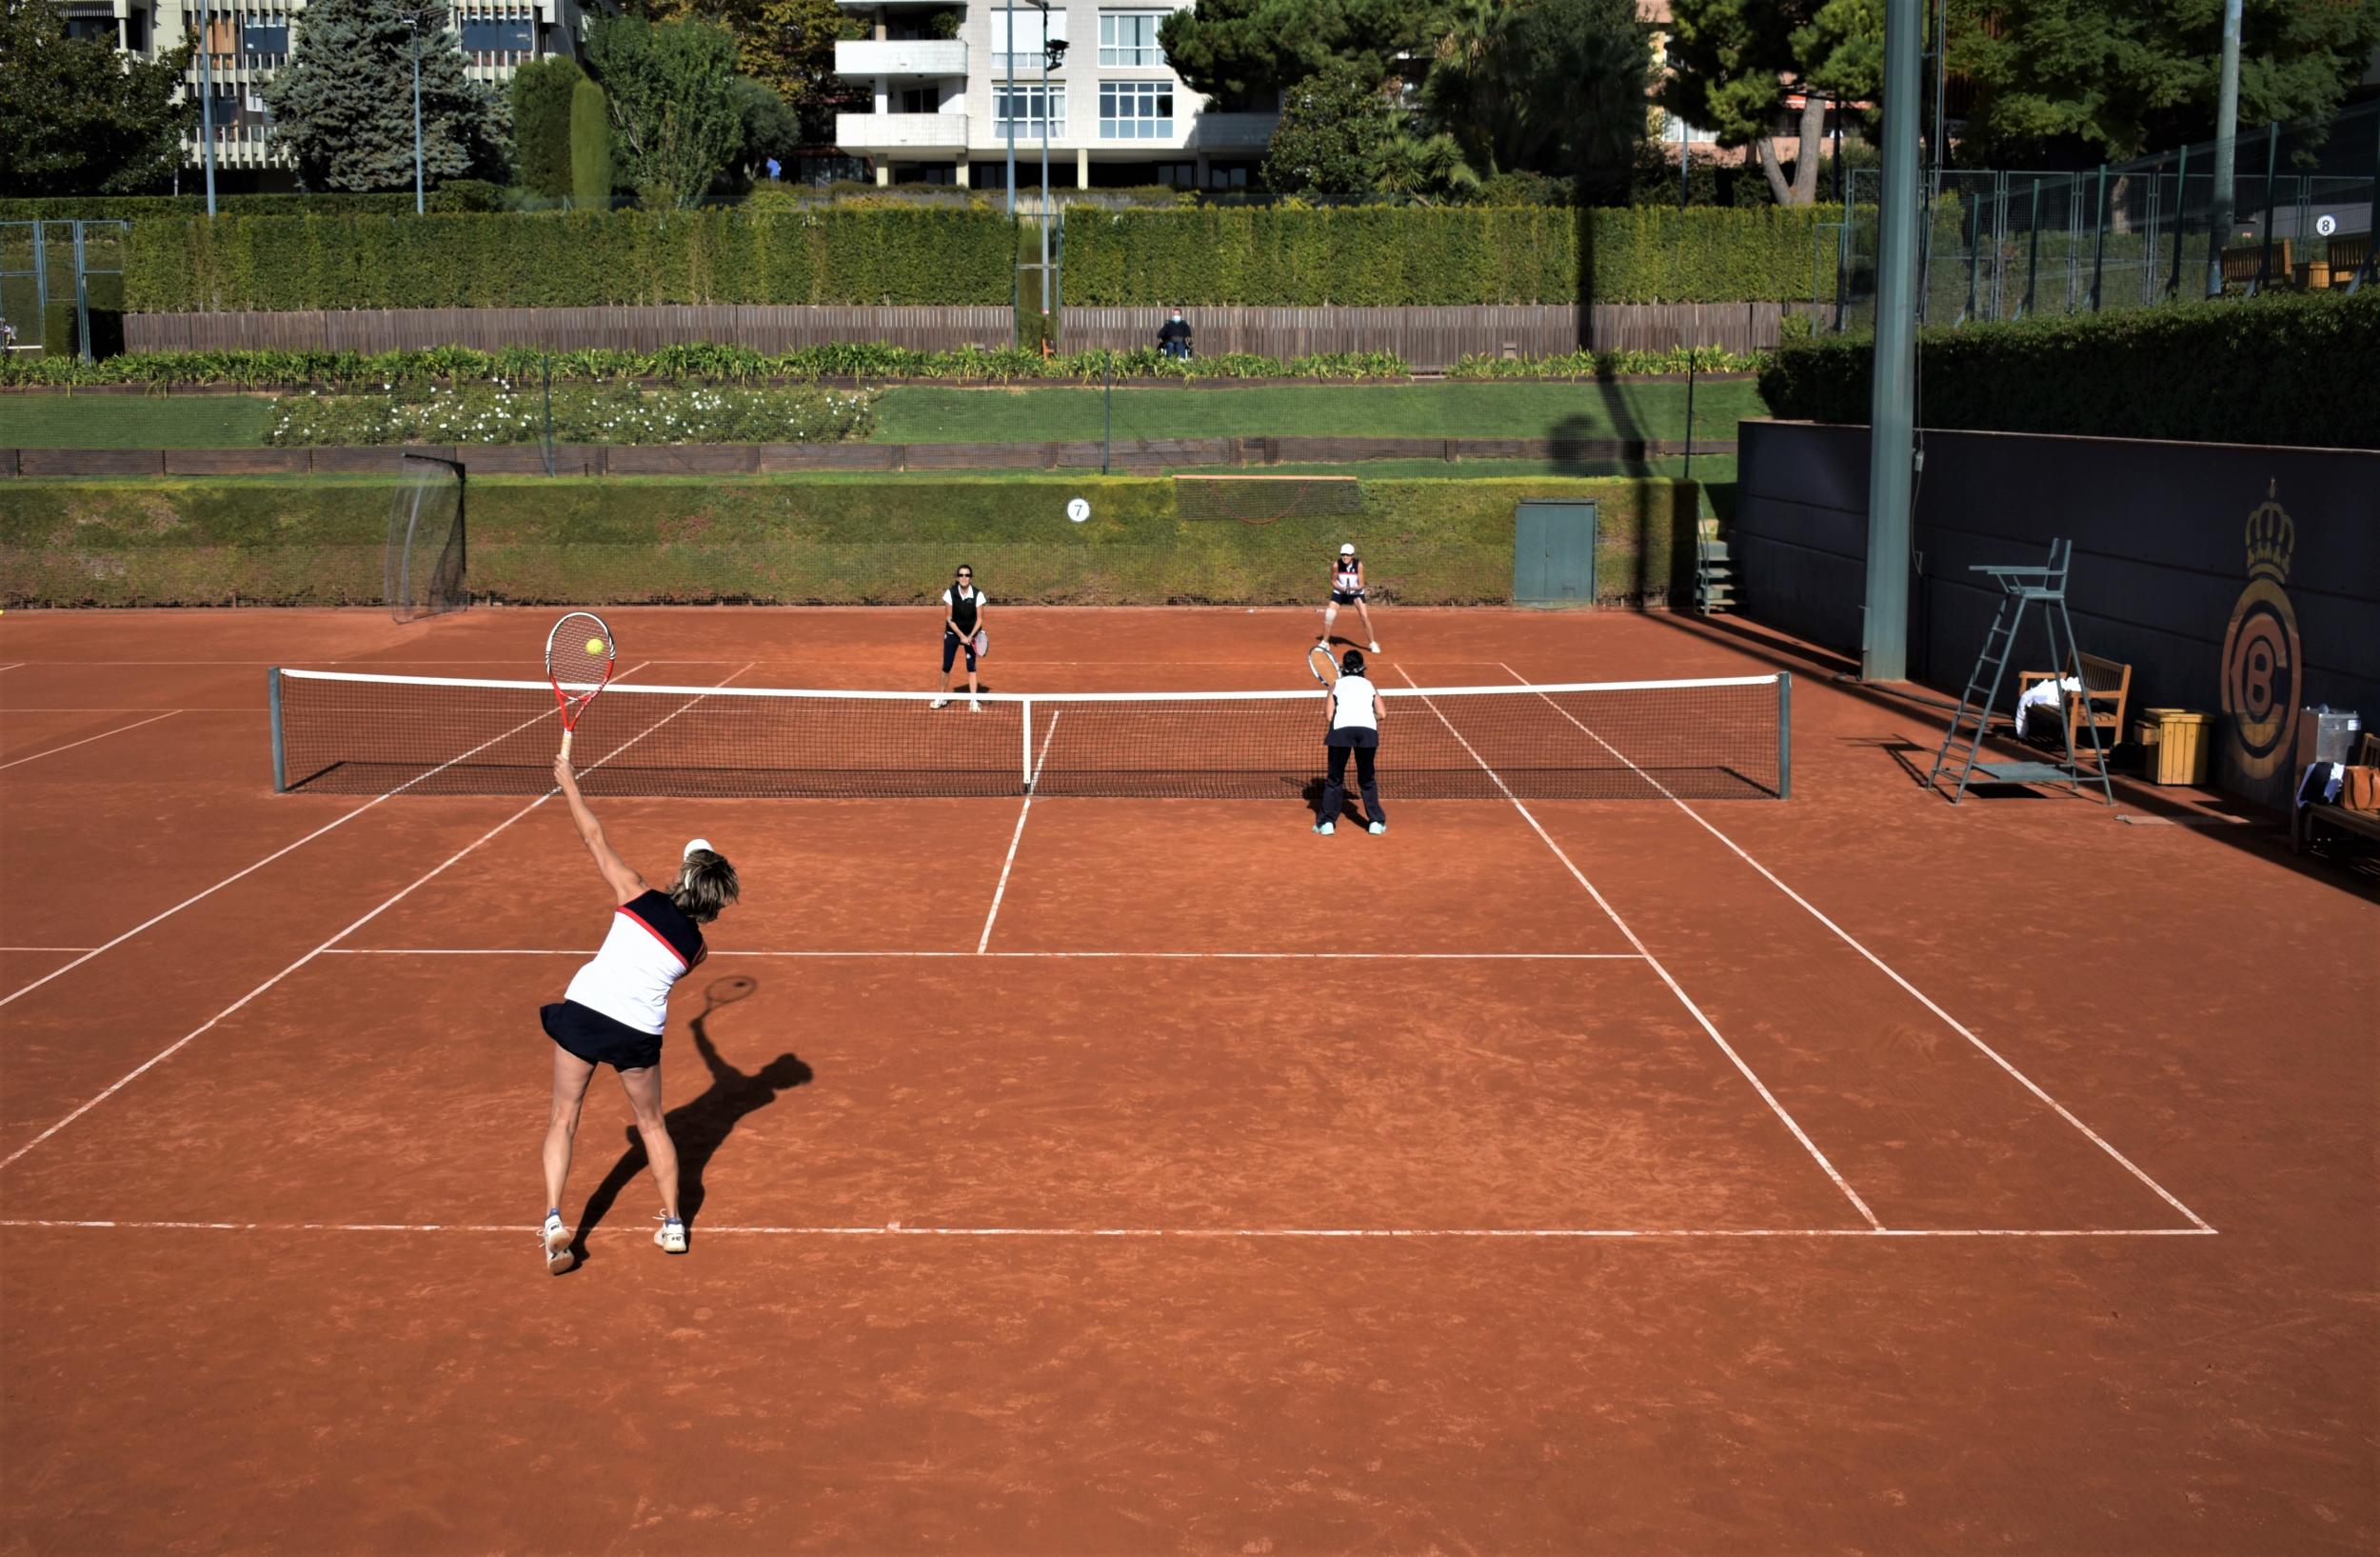 Ja ha arrencat la XII Pool Femenina de Tennis MAPFRE 2020/21